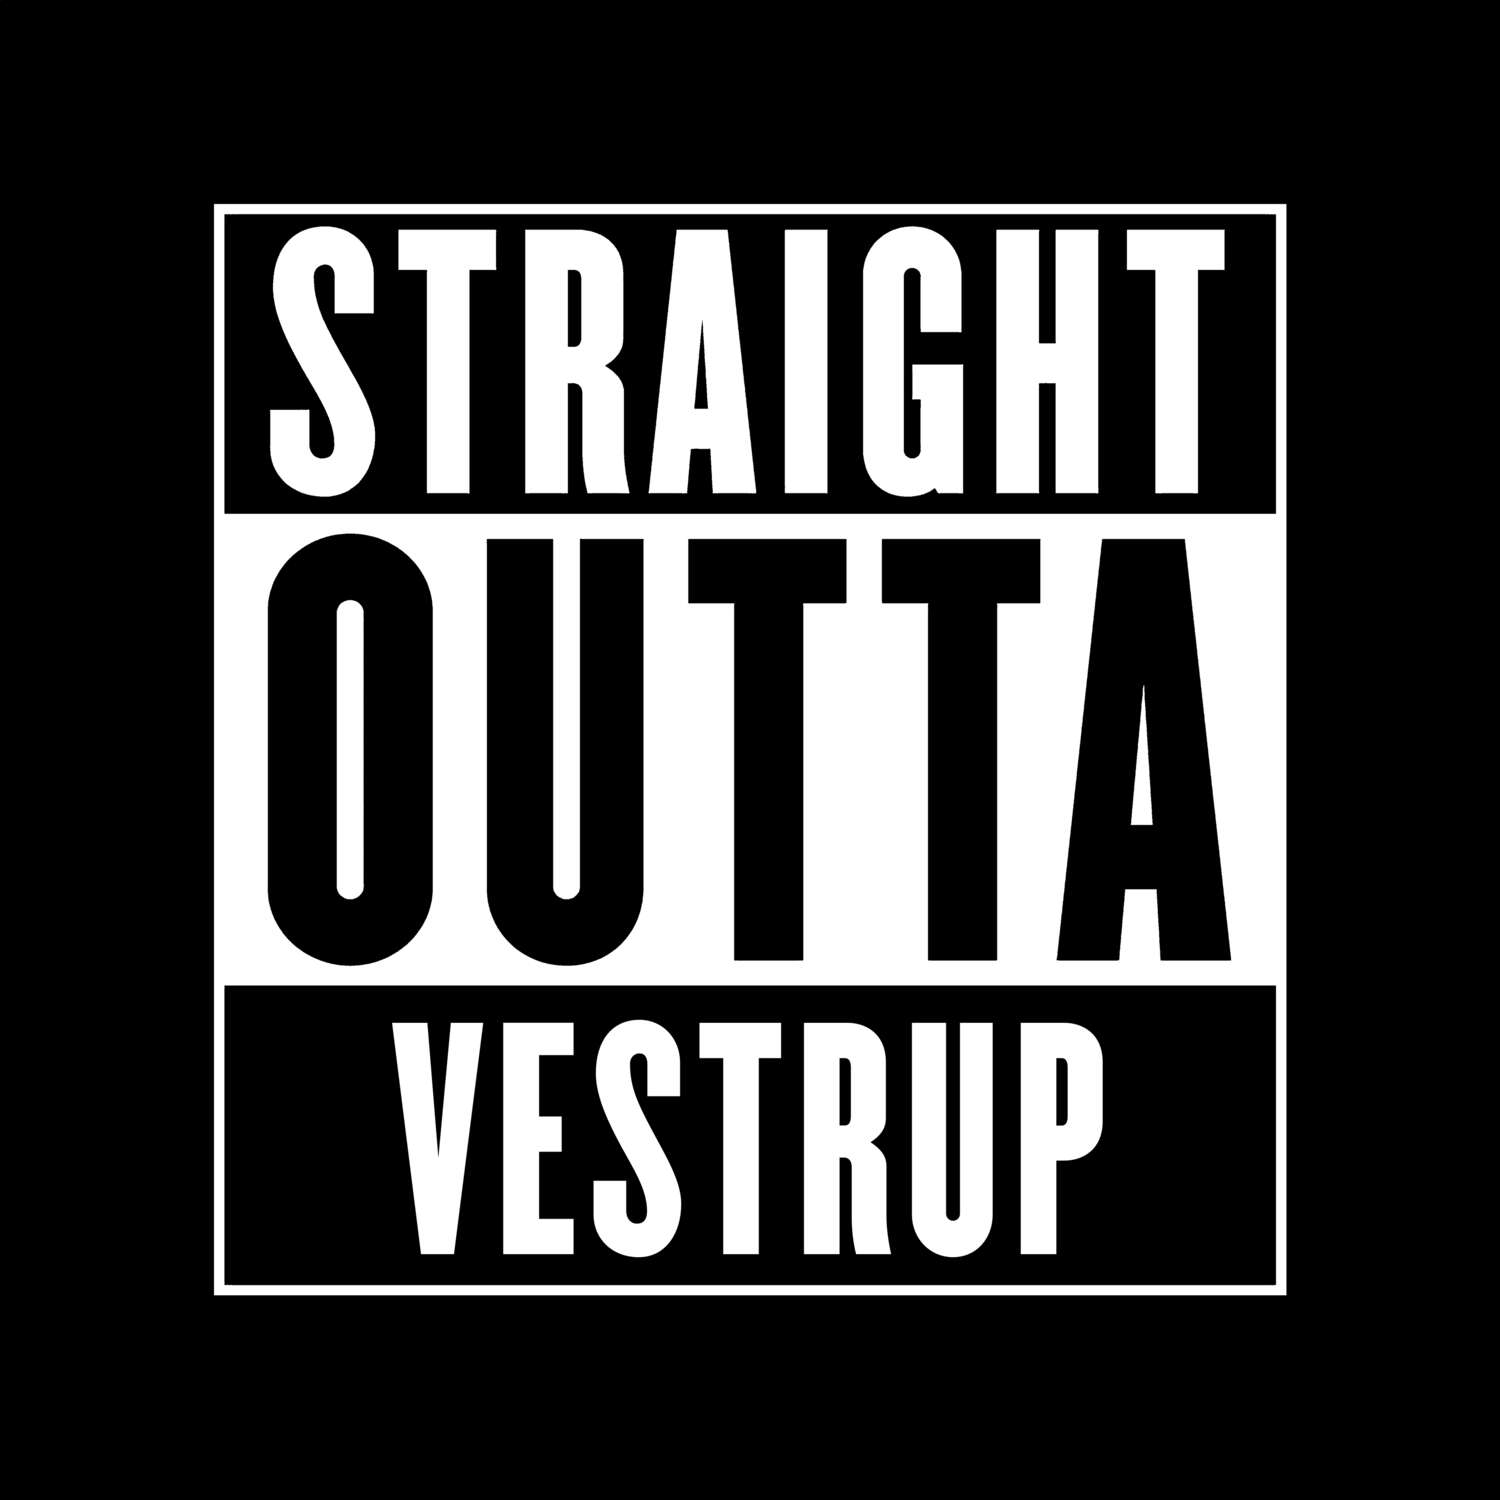 Vestrup T-Shirt »Straight Outta«